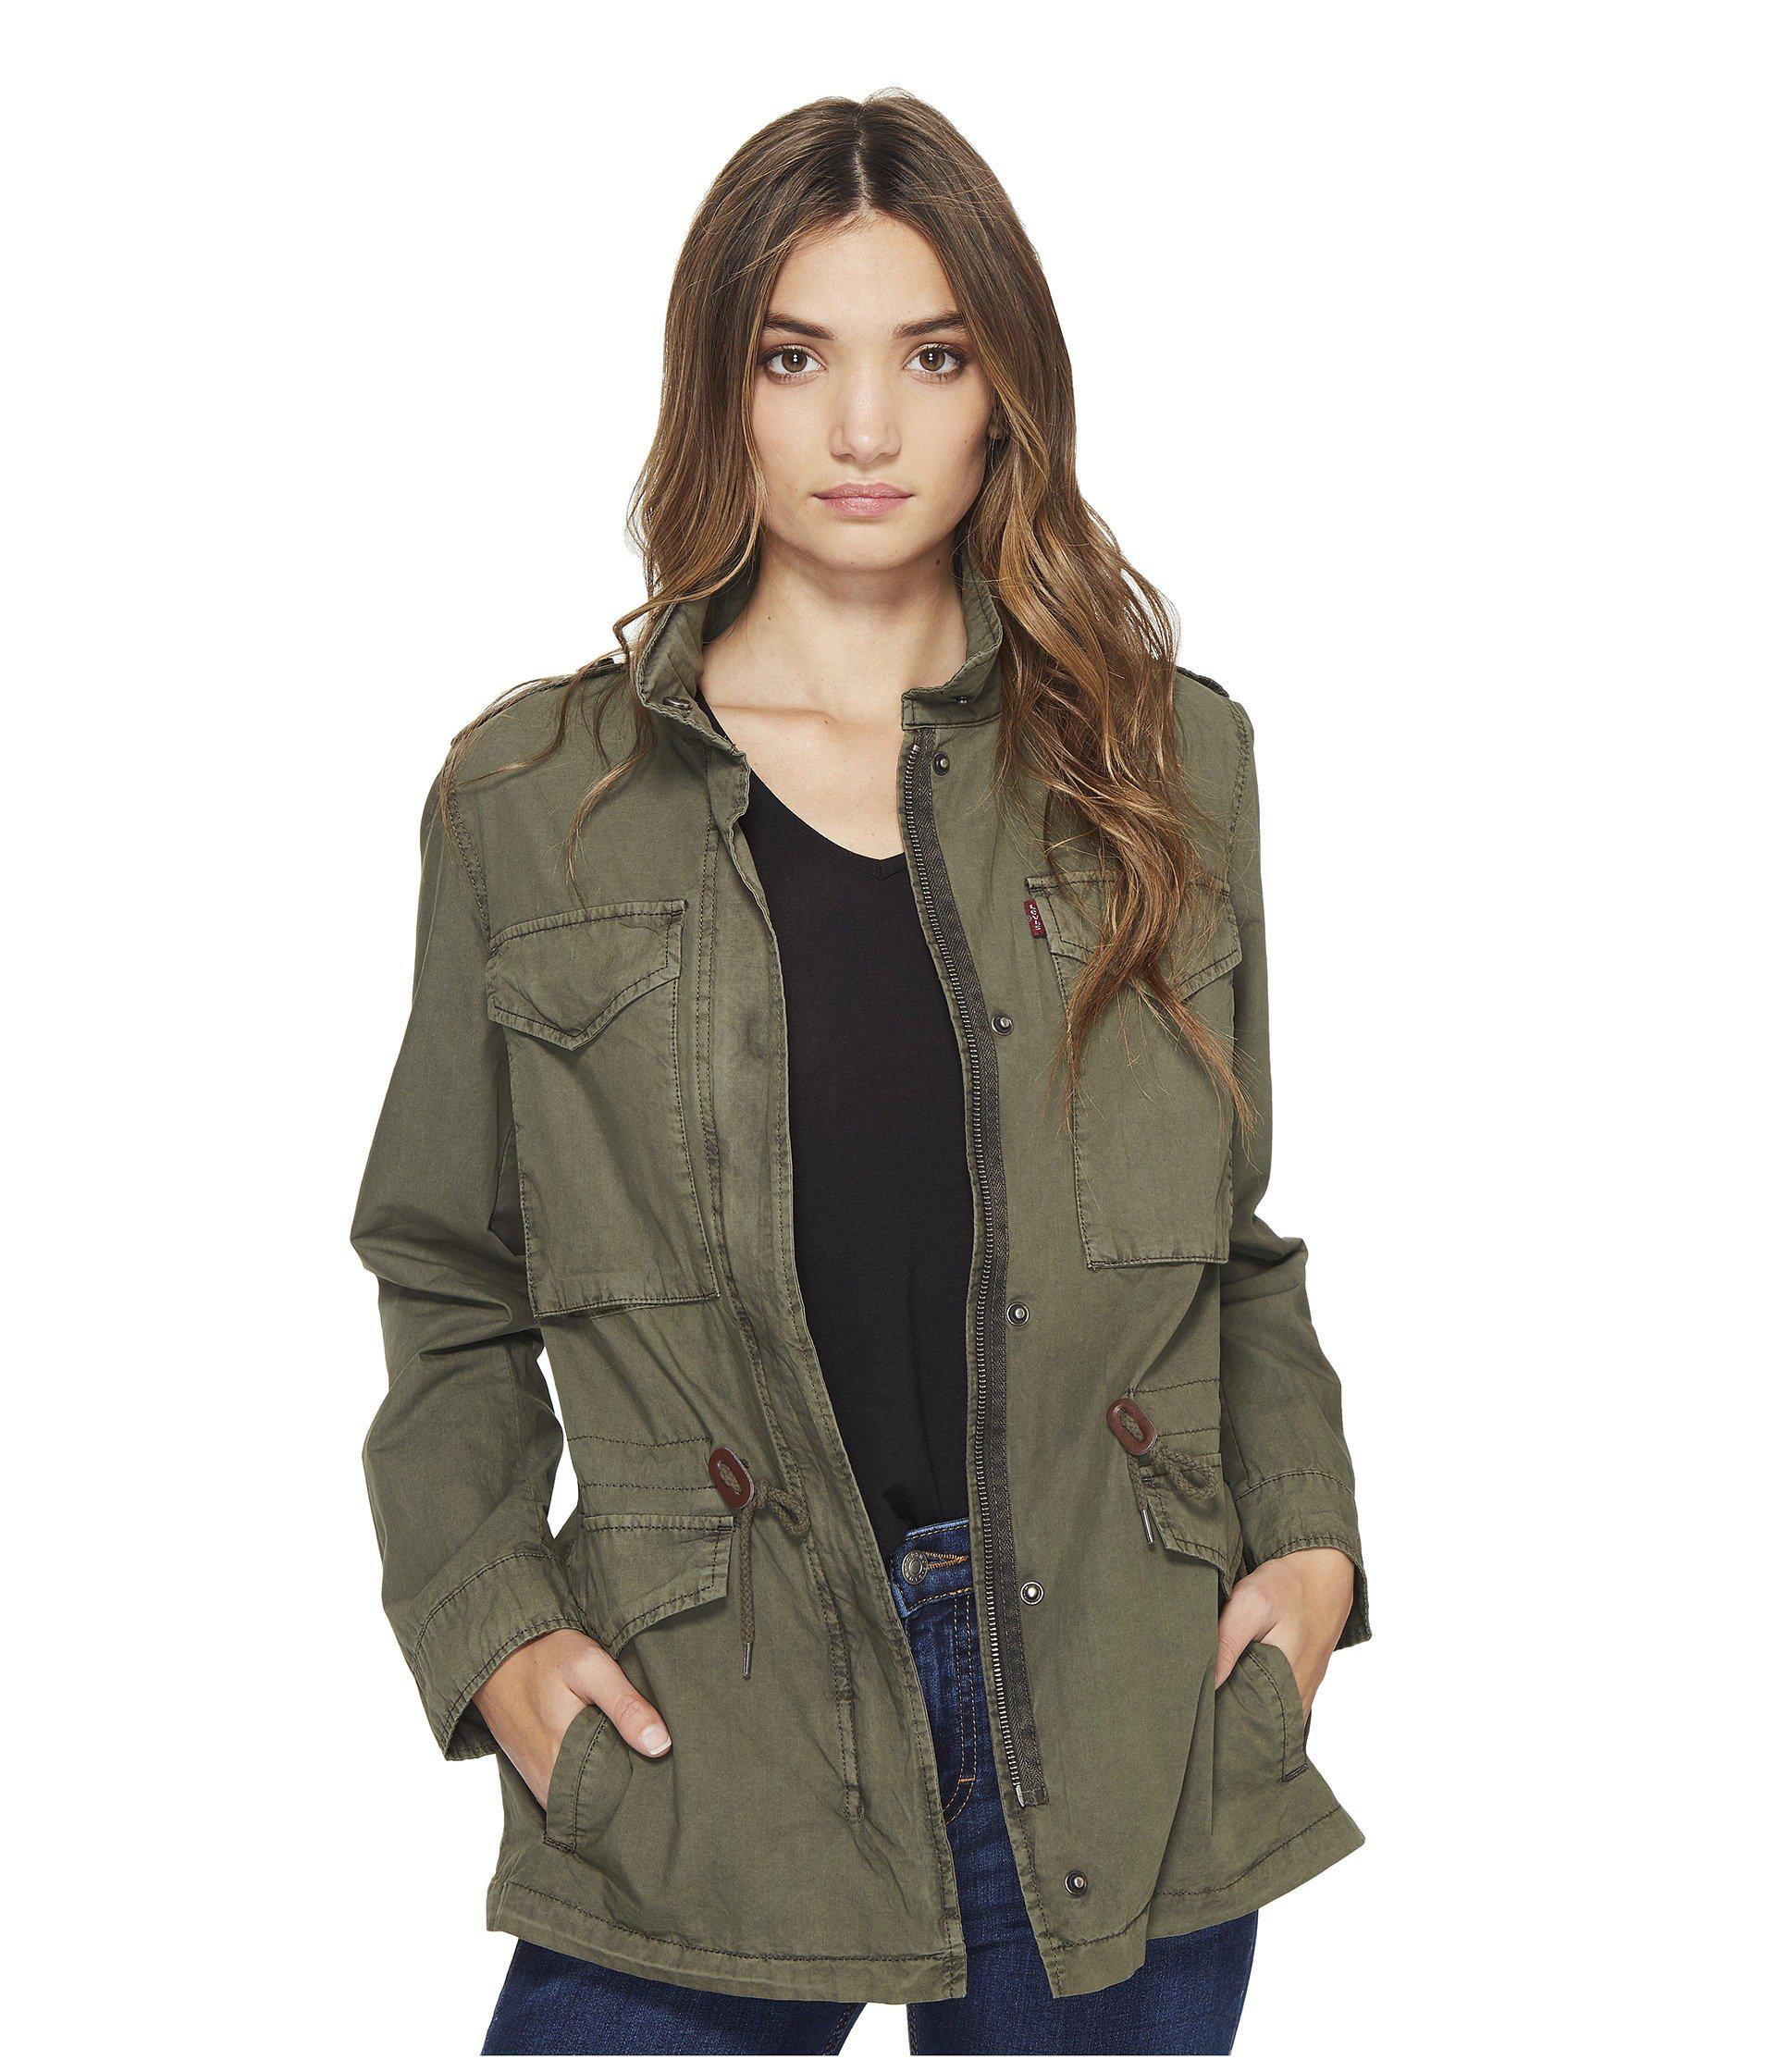 Introducir 50+ imagen levi's military jacket womens - Abzlocal.mx